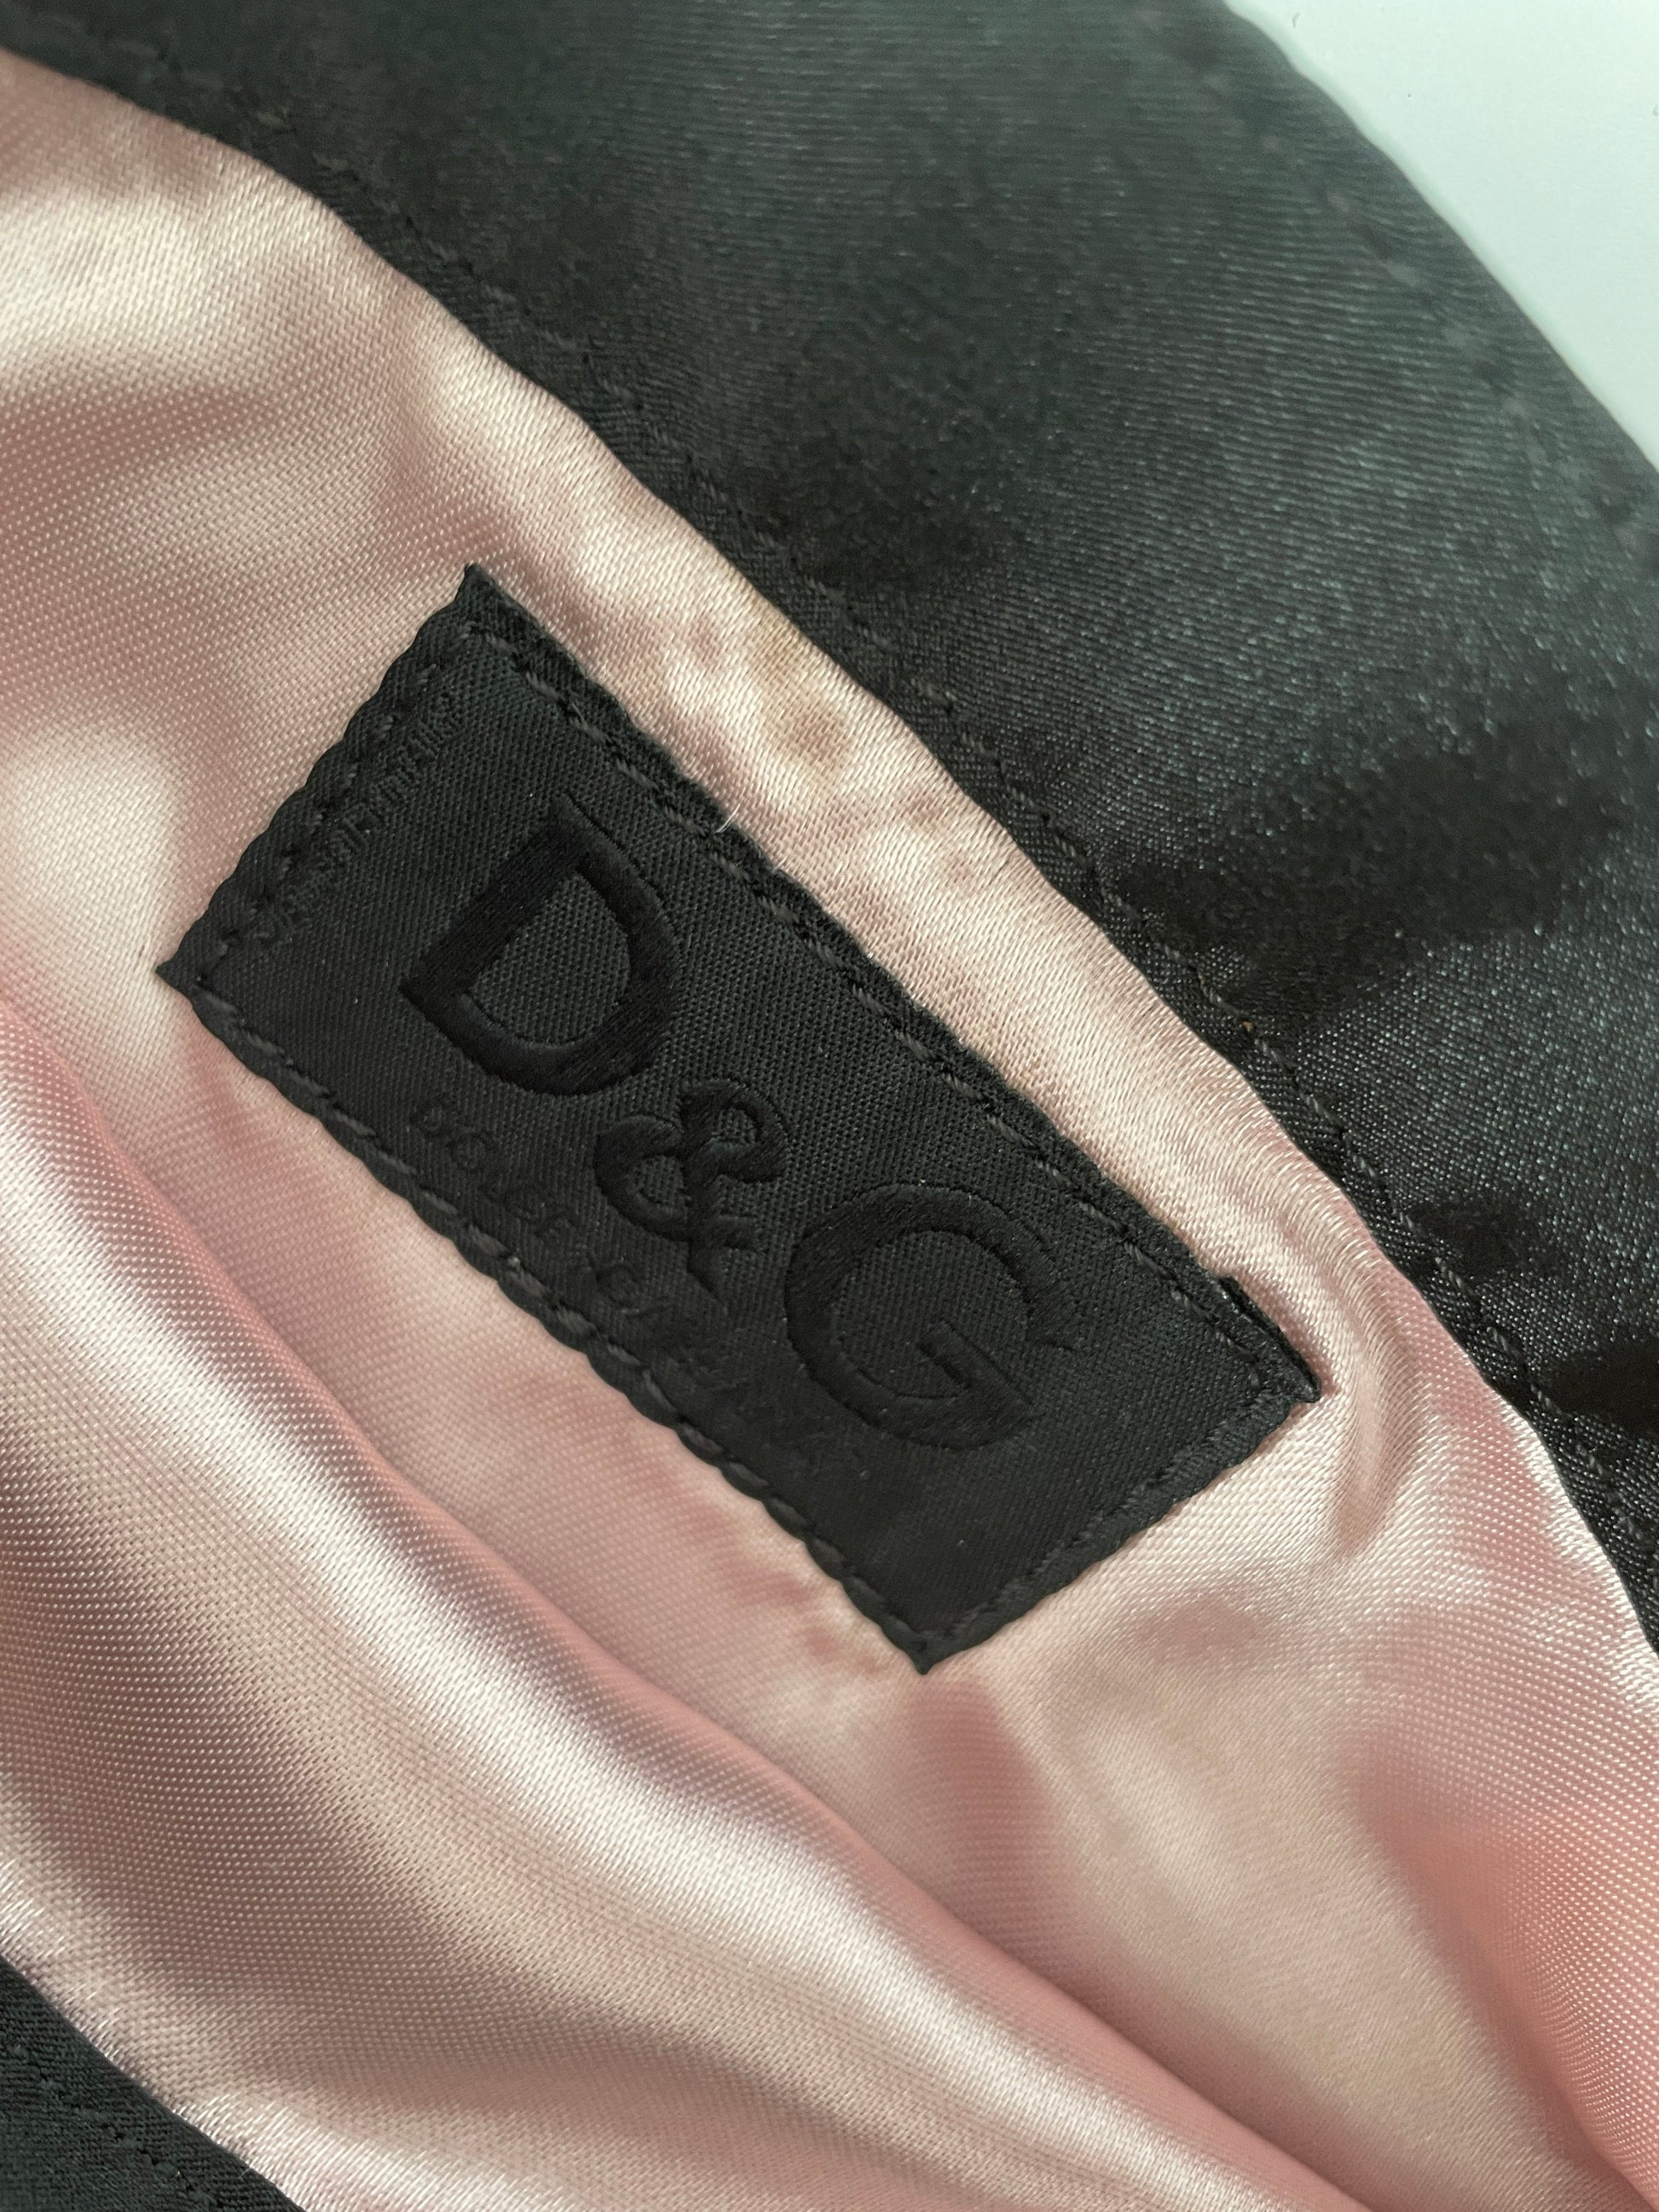 Dolce & Gabbana silk beaded butterfly rhinestone tote bag